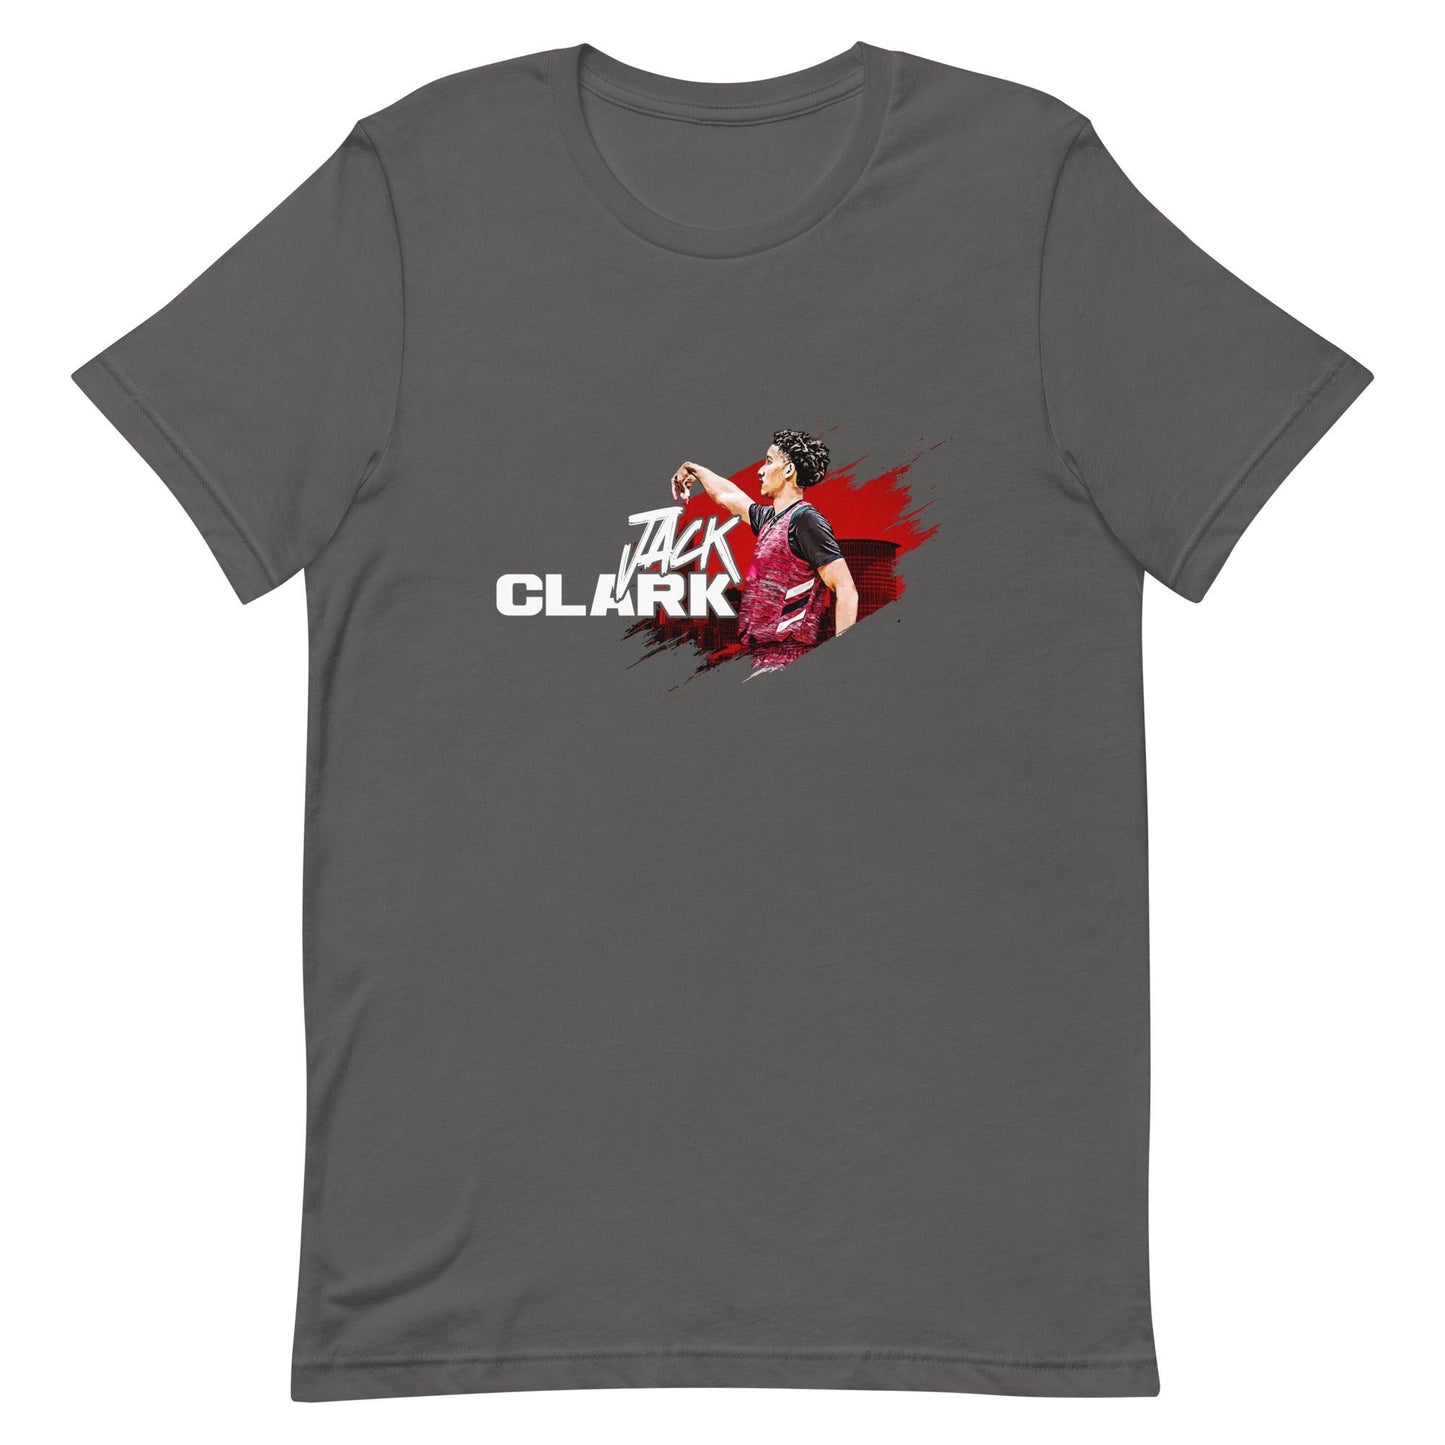 Jack Clark "Gameday" t-shirt - Fan Arch